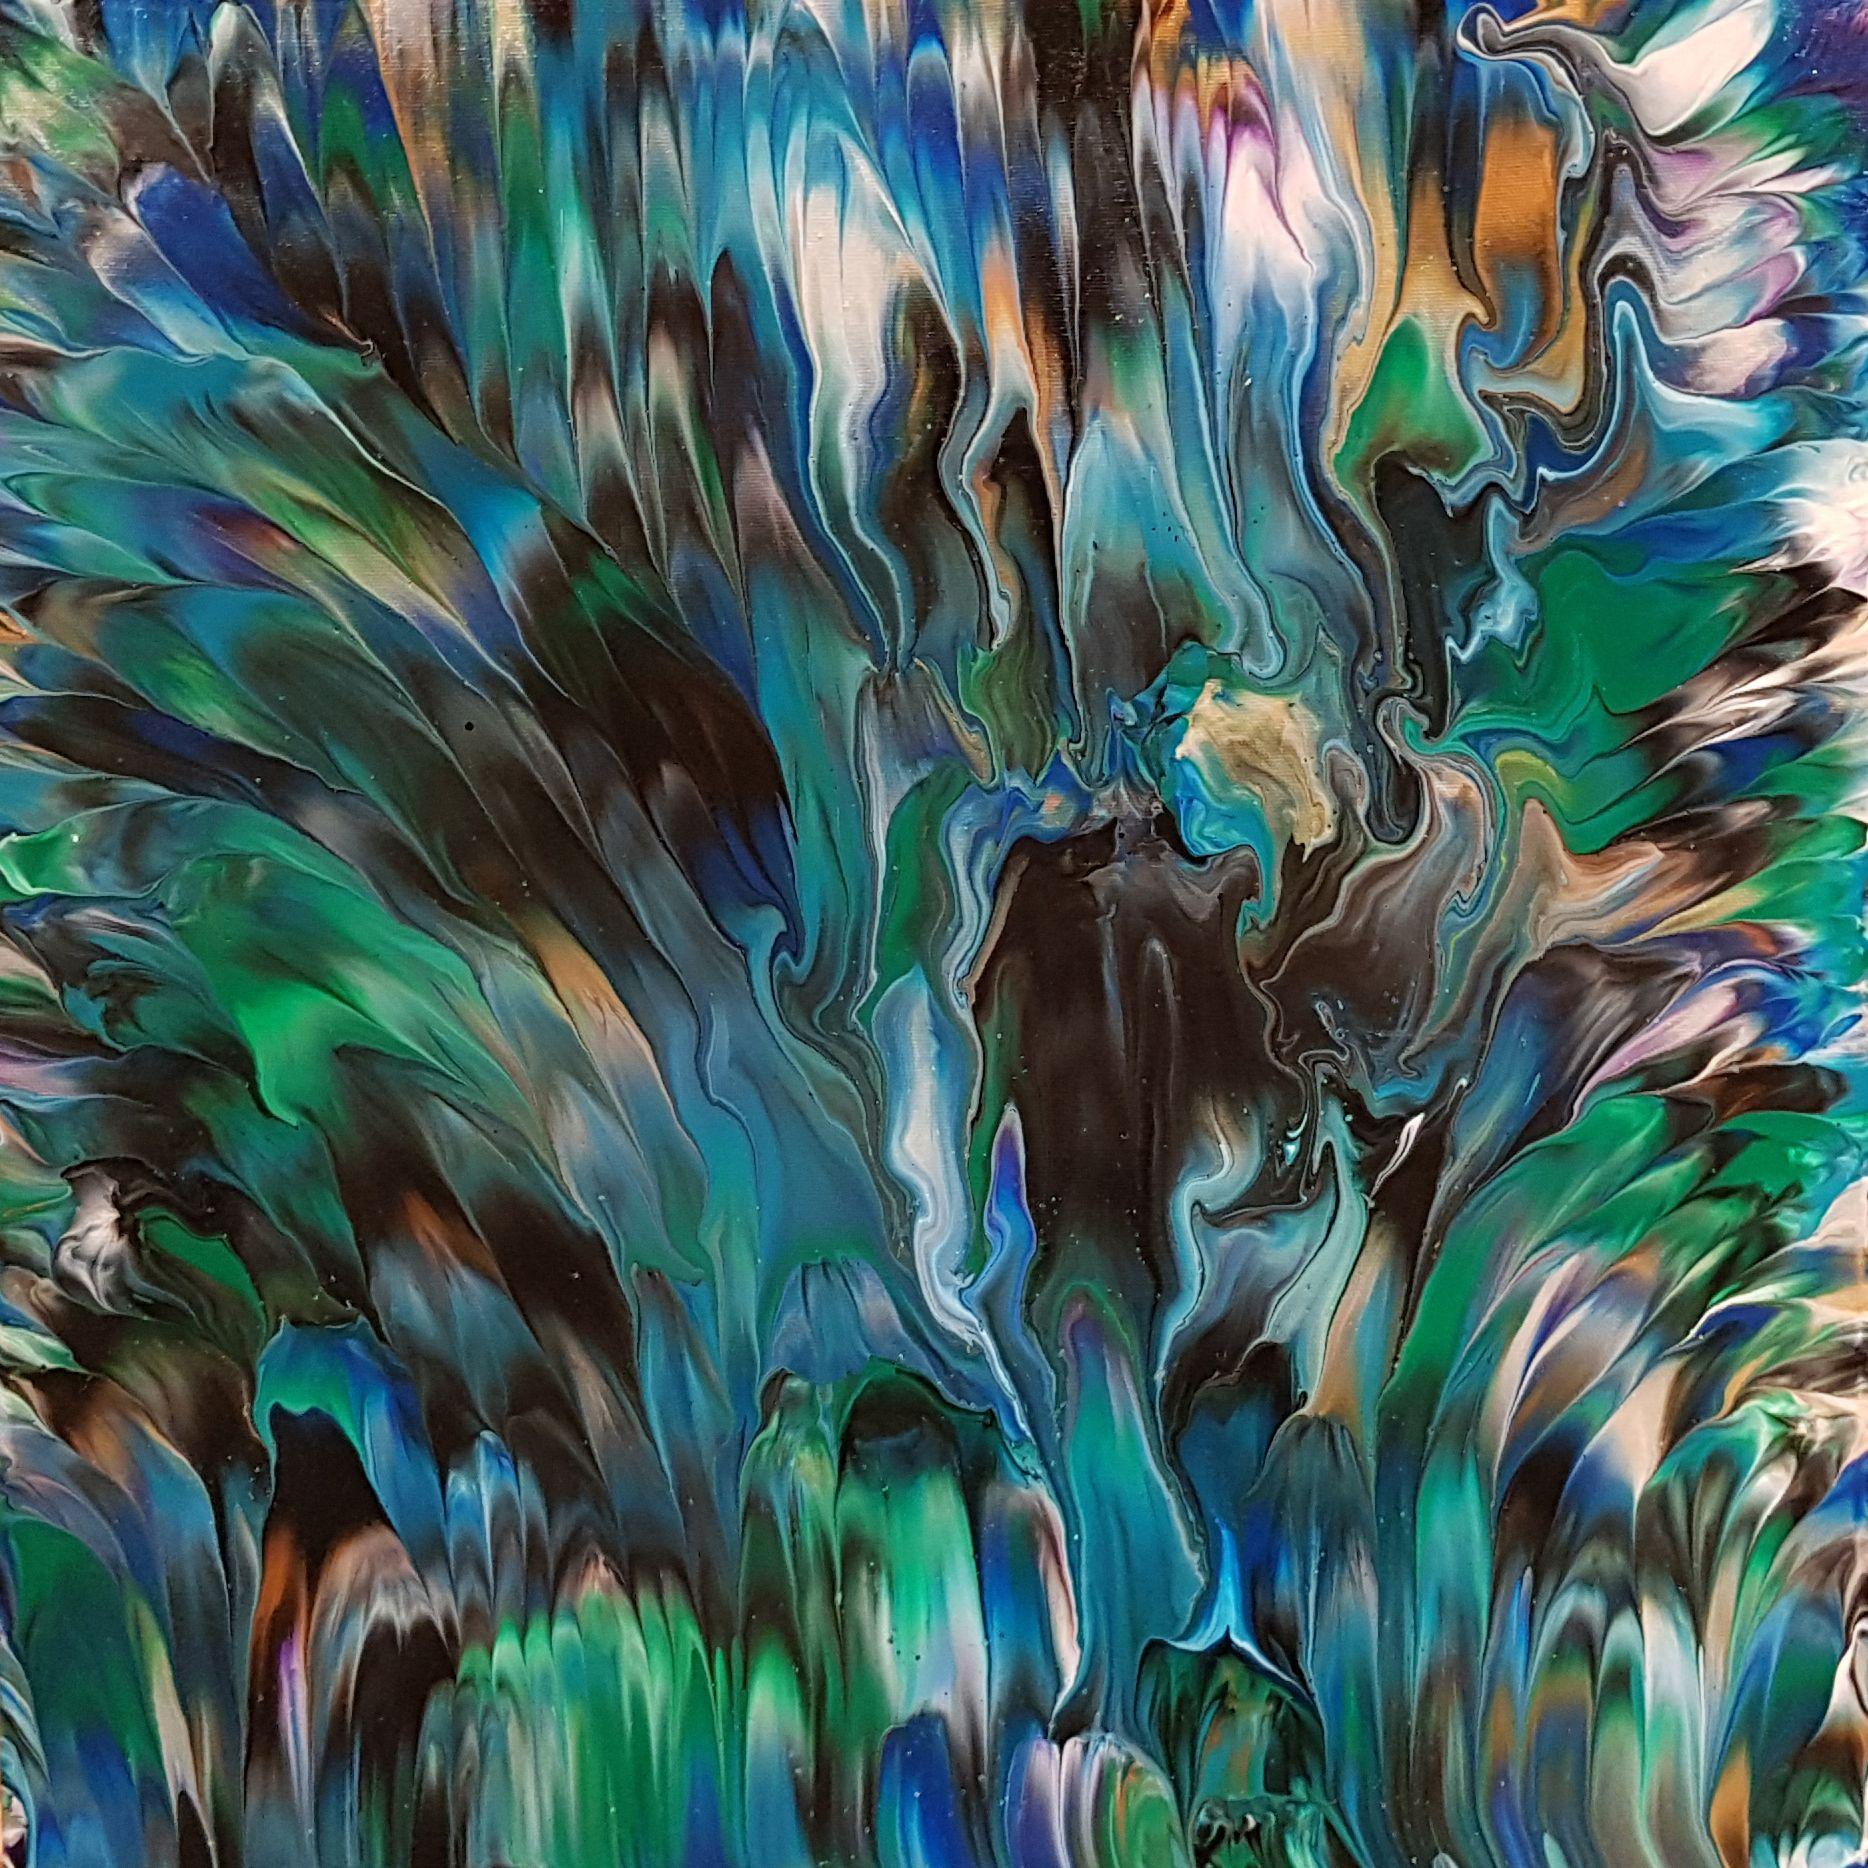 Alexandra Romano Abstract Painting - Peacock, Painting, Acrylic on Canvas